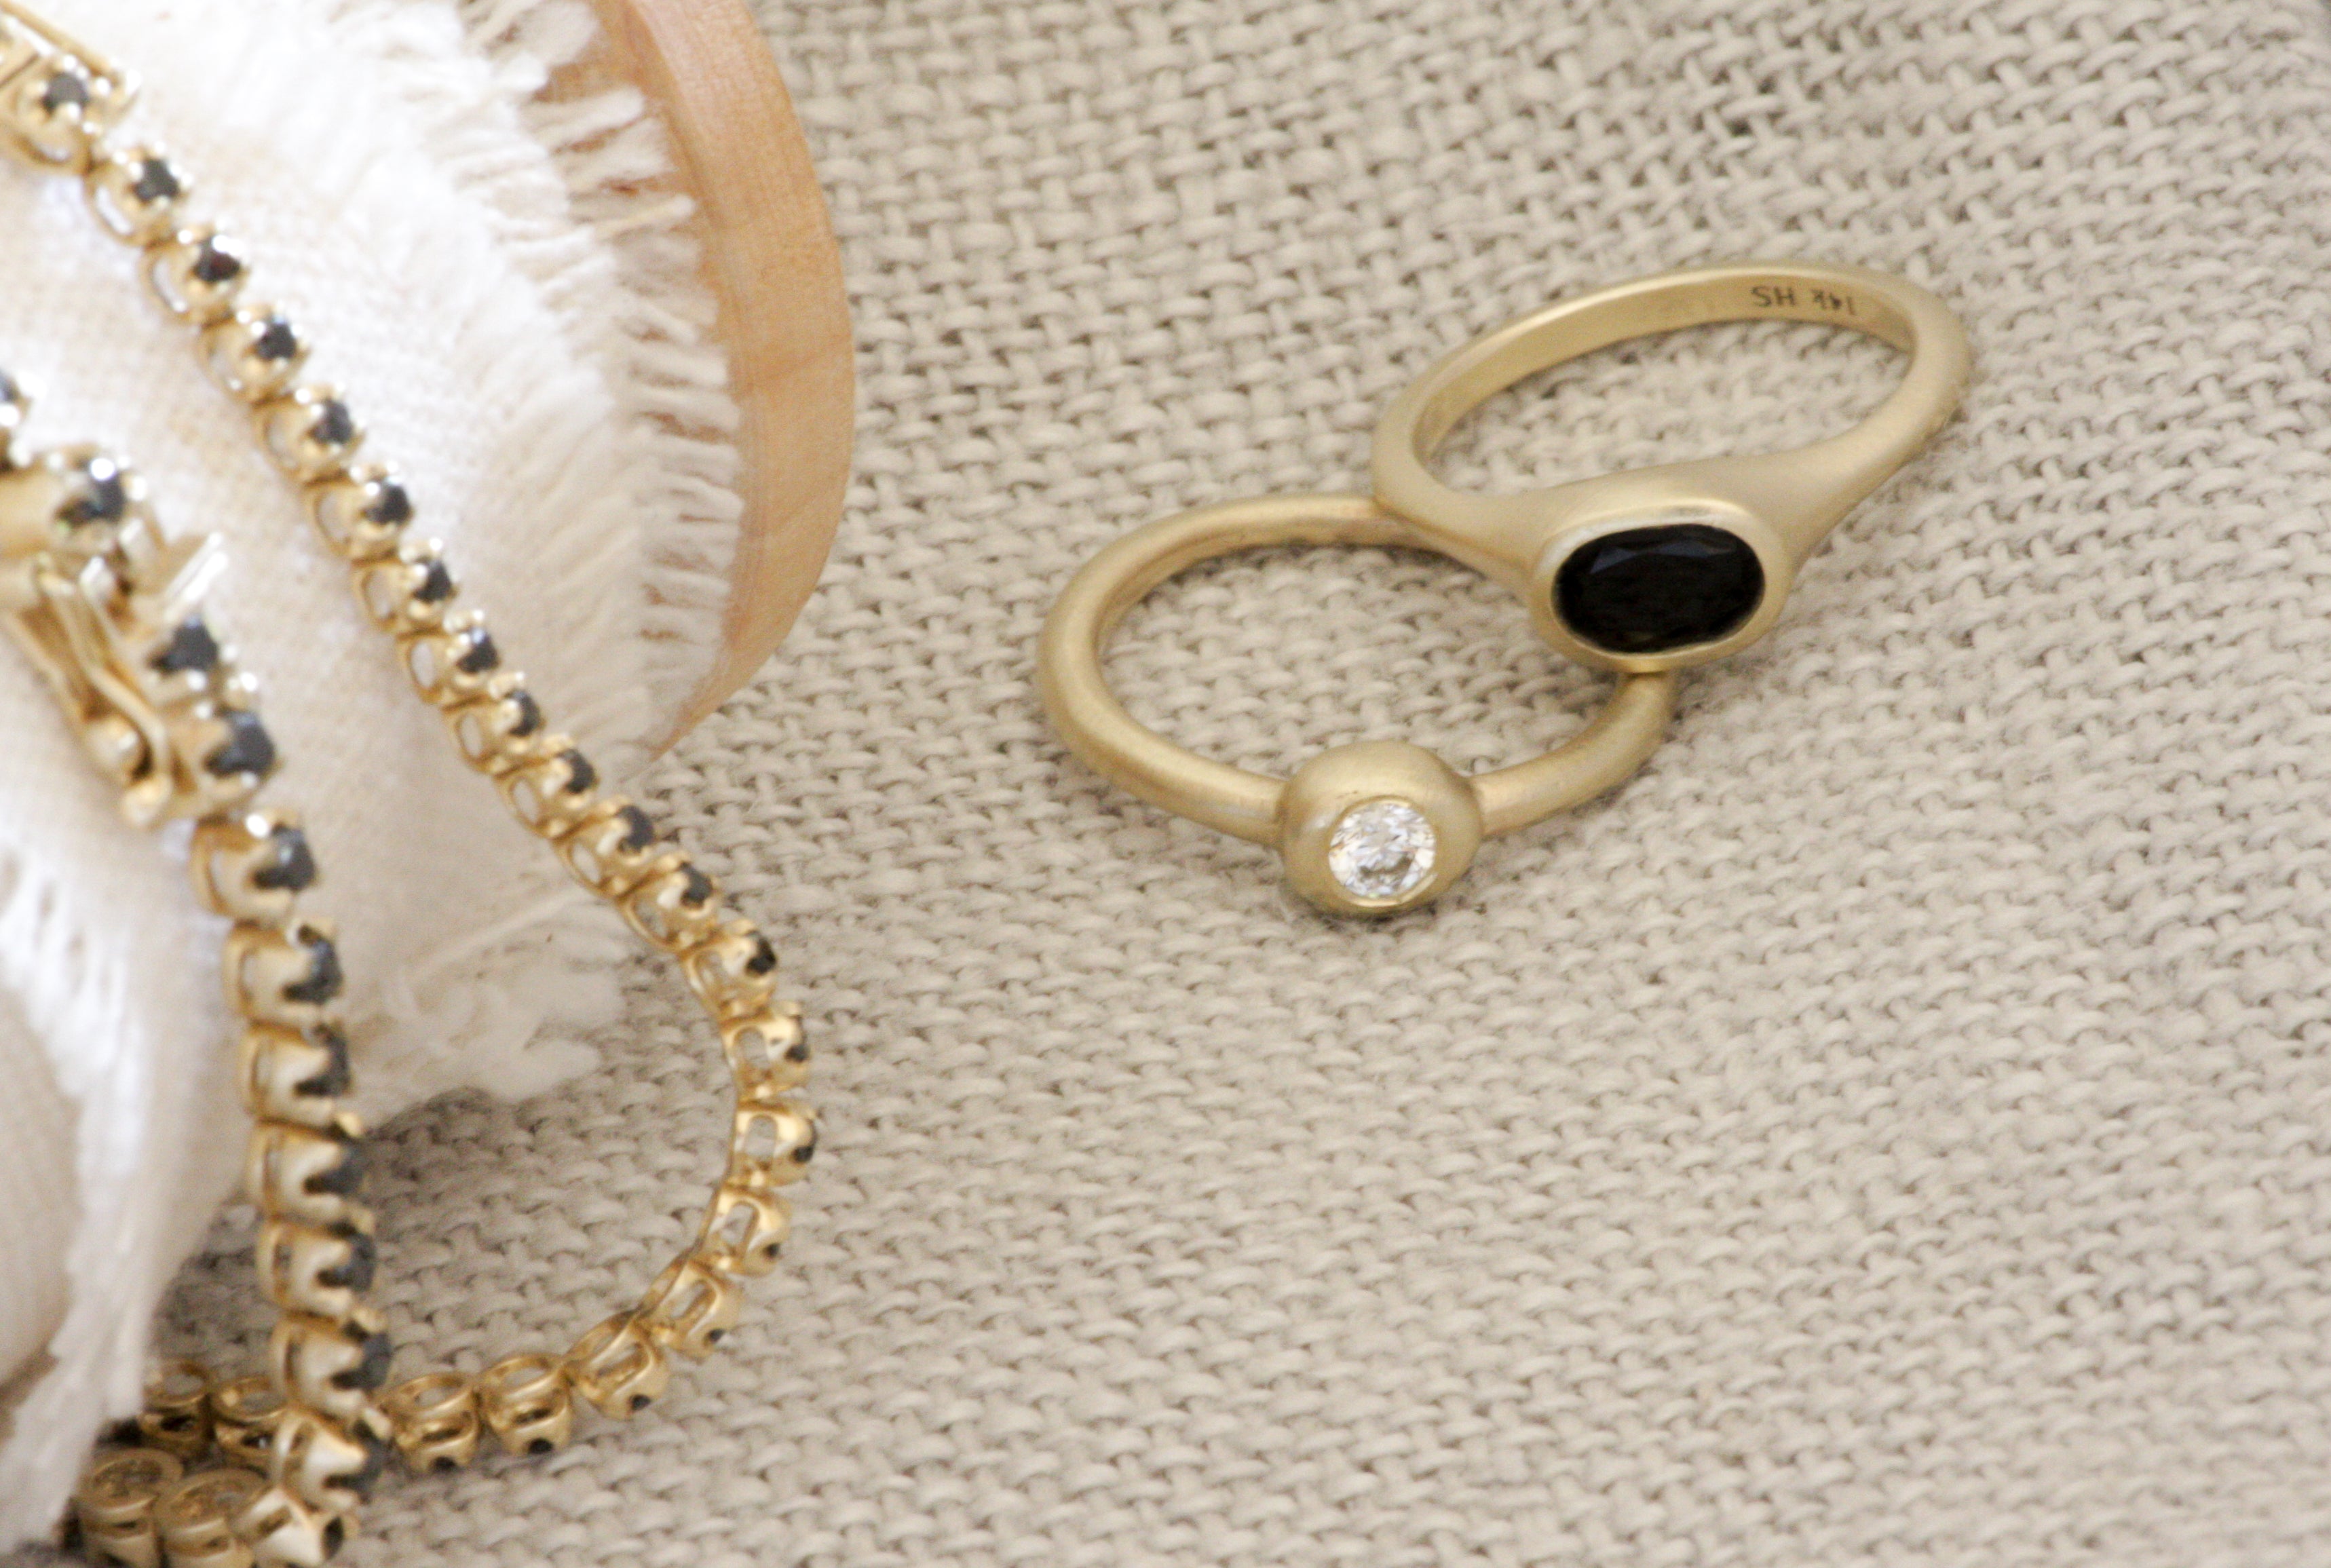 Small "ZOHAR" Ring - Impressive natural solitaire white diamond ring